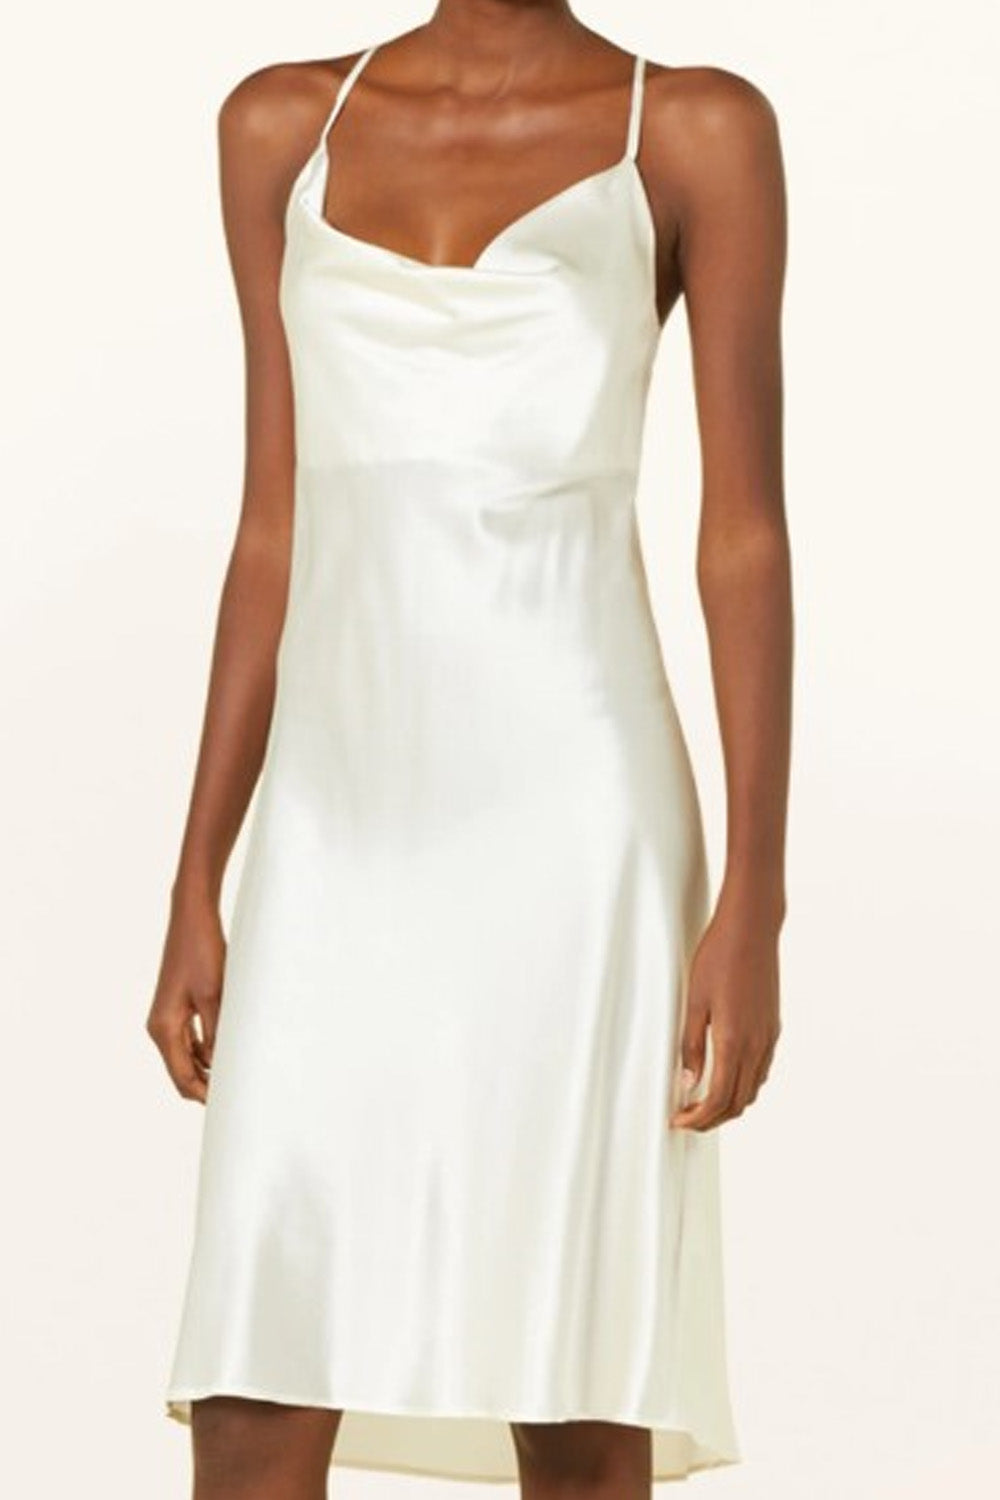 Perky White Dress